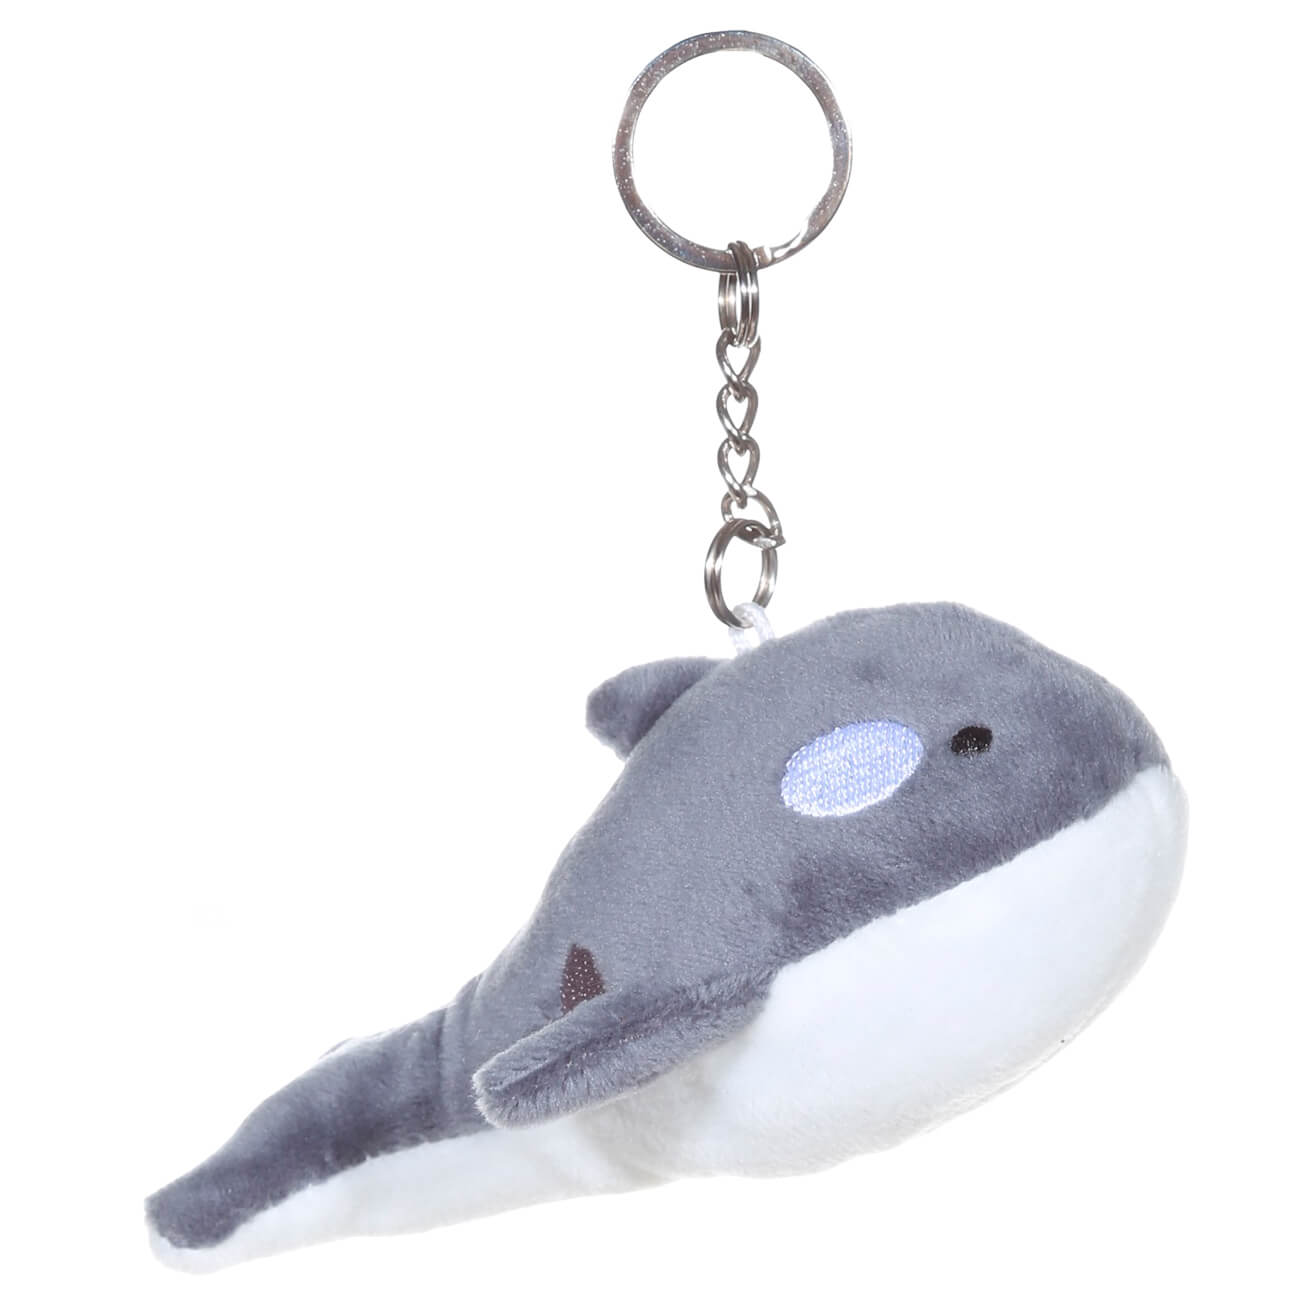 Keychain, 14 cm, soft, polyester / metal, gray, Killer whale, Aquatic animals изображение № 1